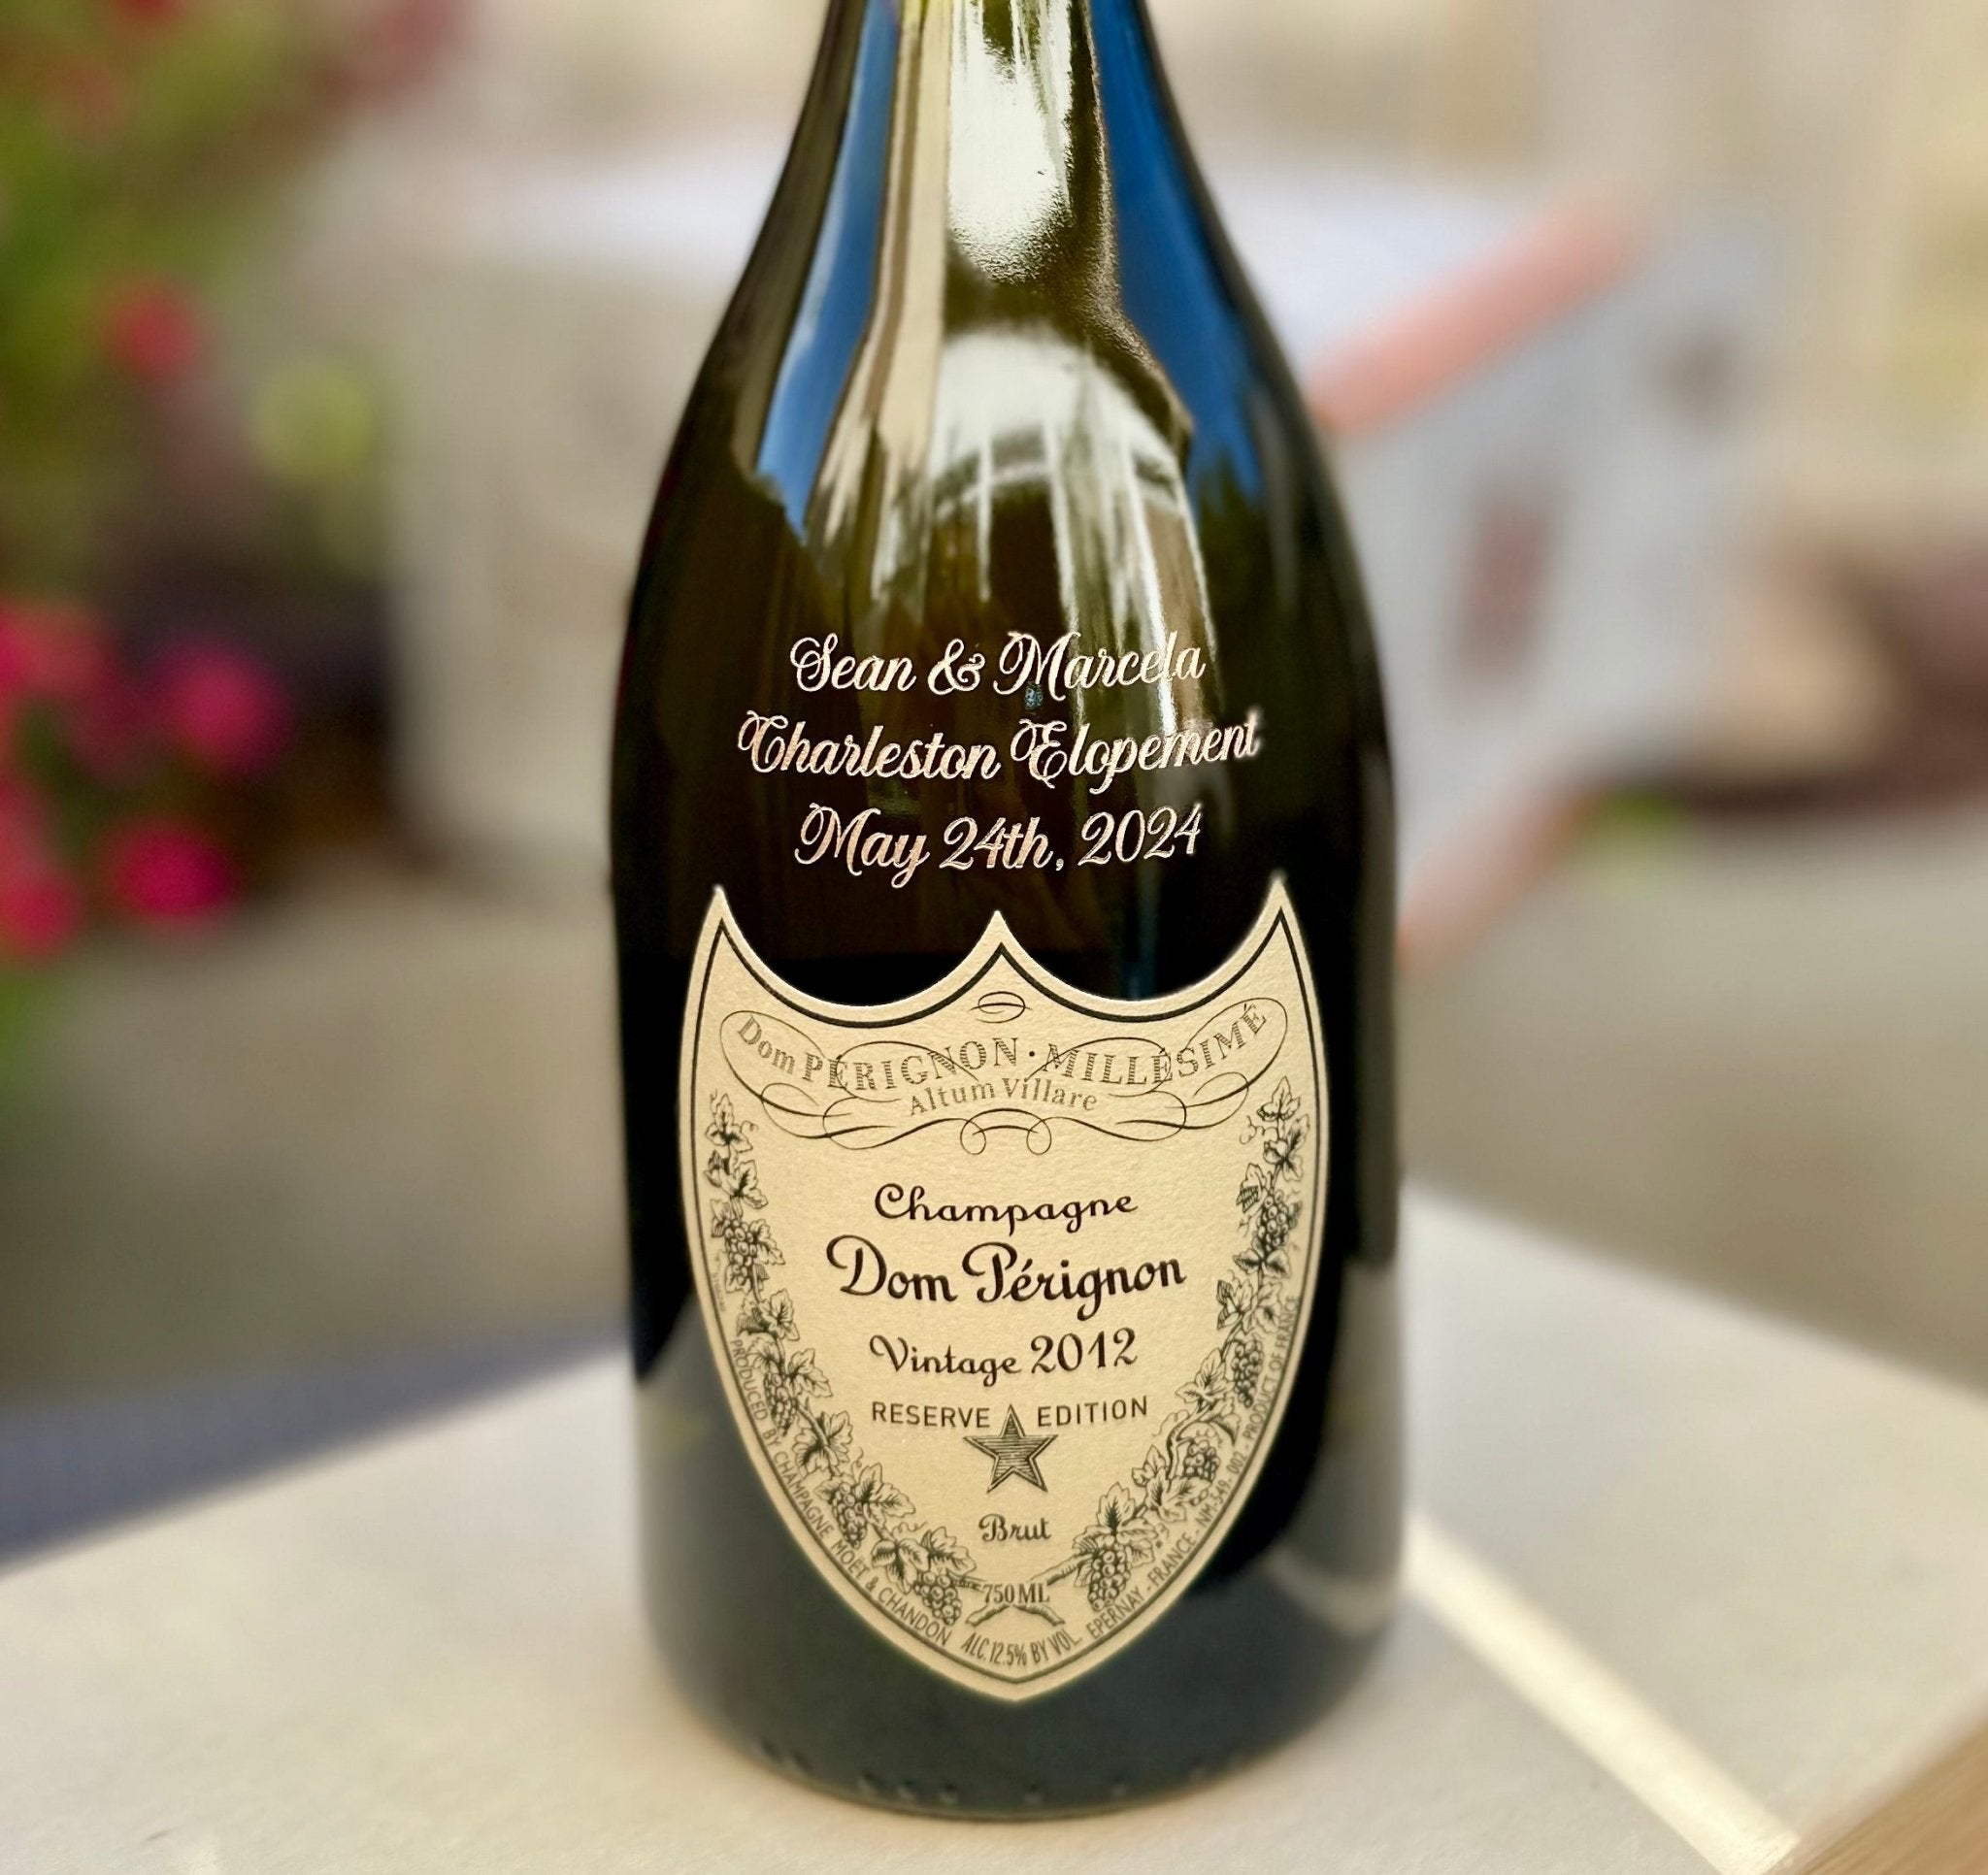 Dom Pérignon Champagne France - Bottle Engraving